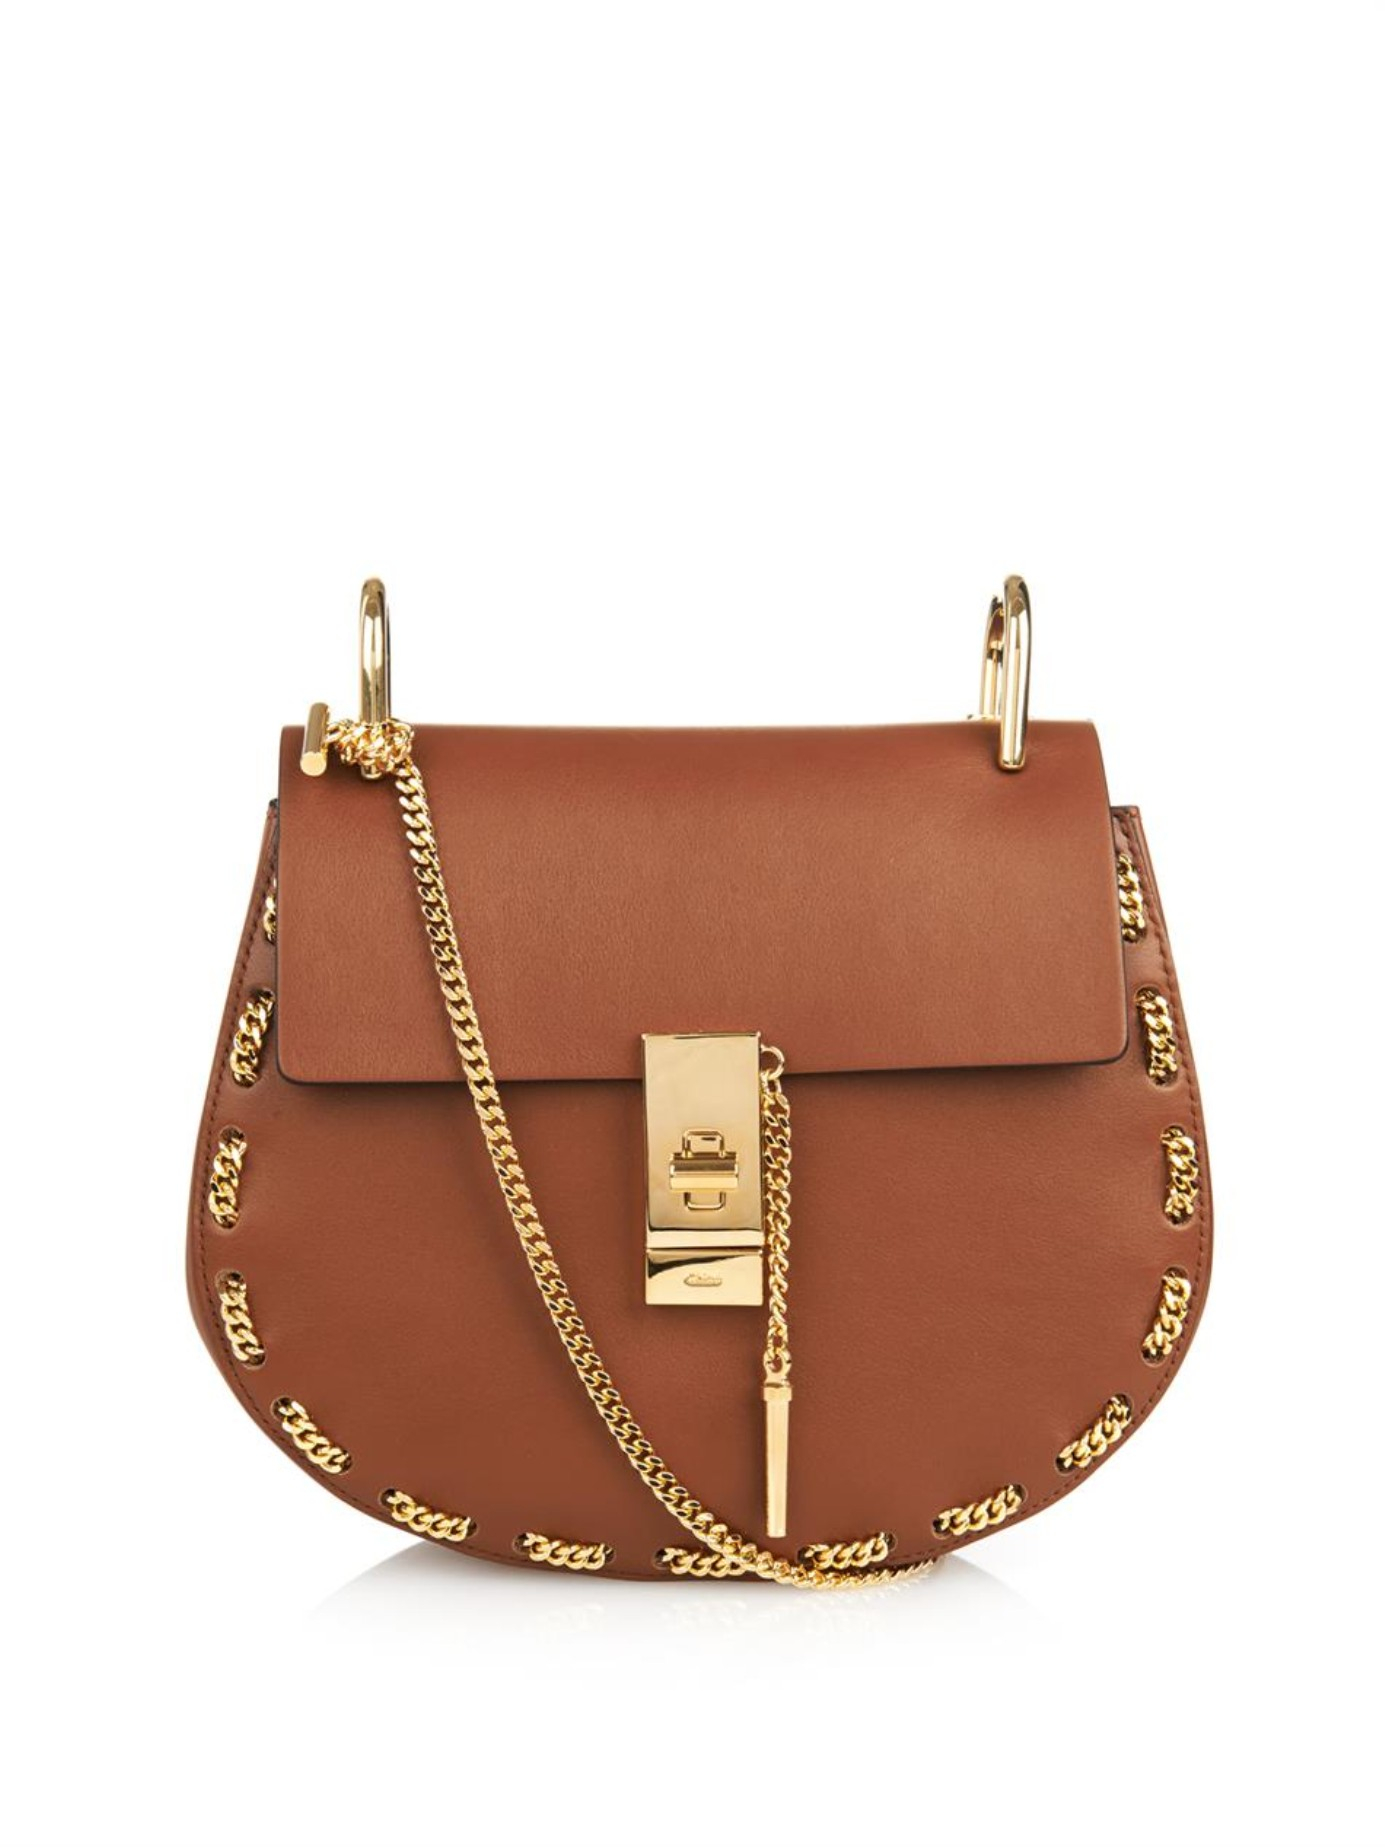 Lyst - Chloé Drew Threaded-Chain Shoulder Bag in Brown